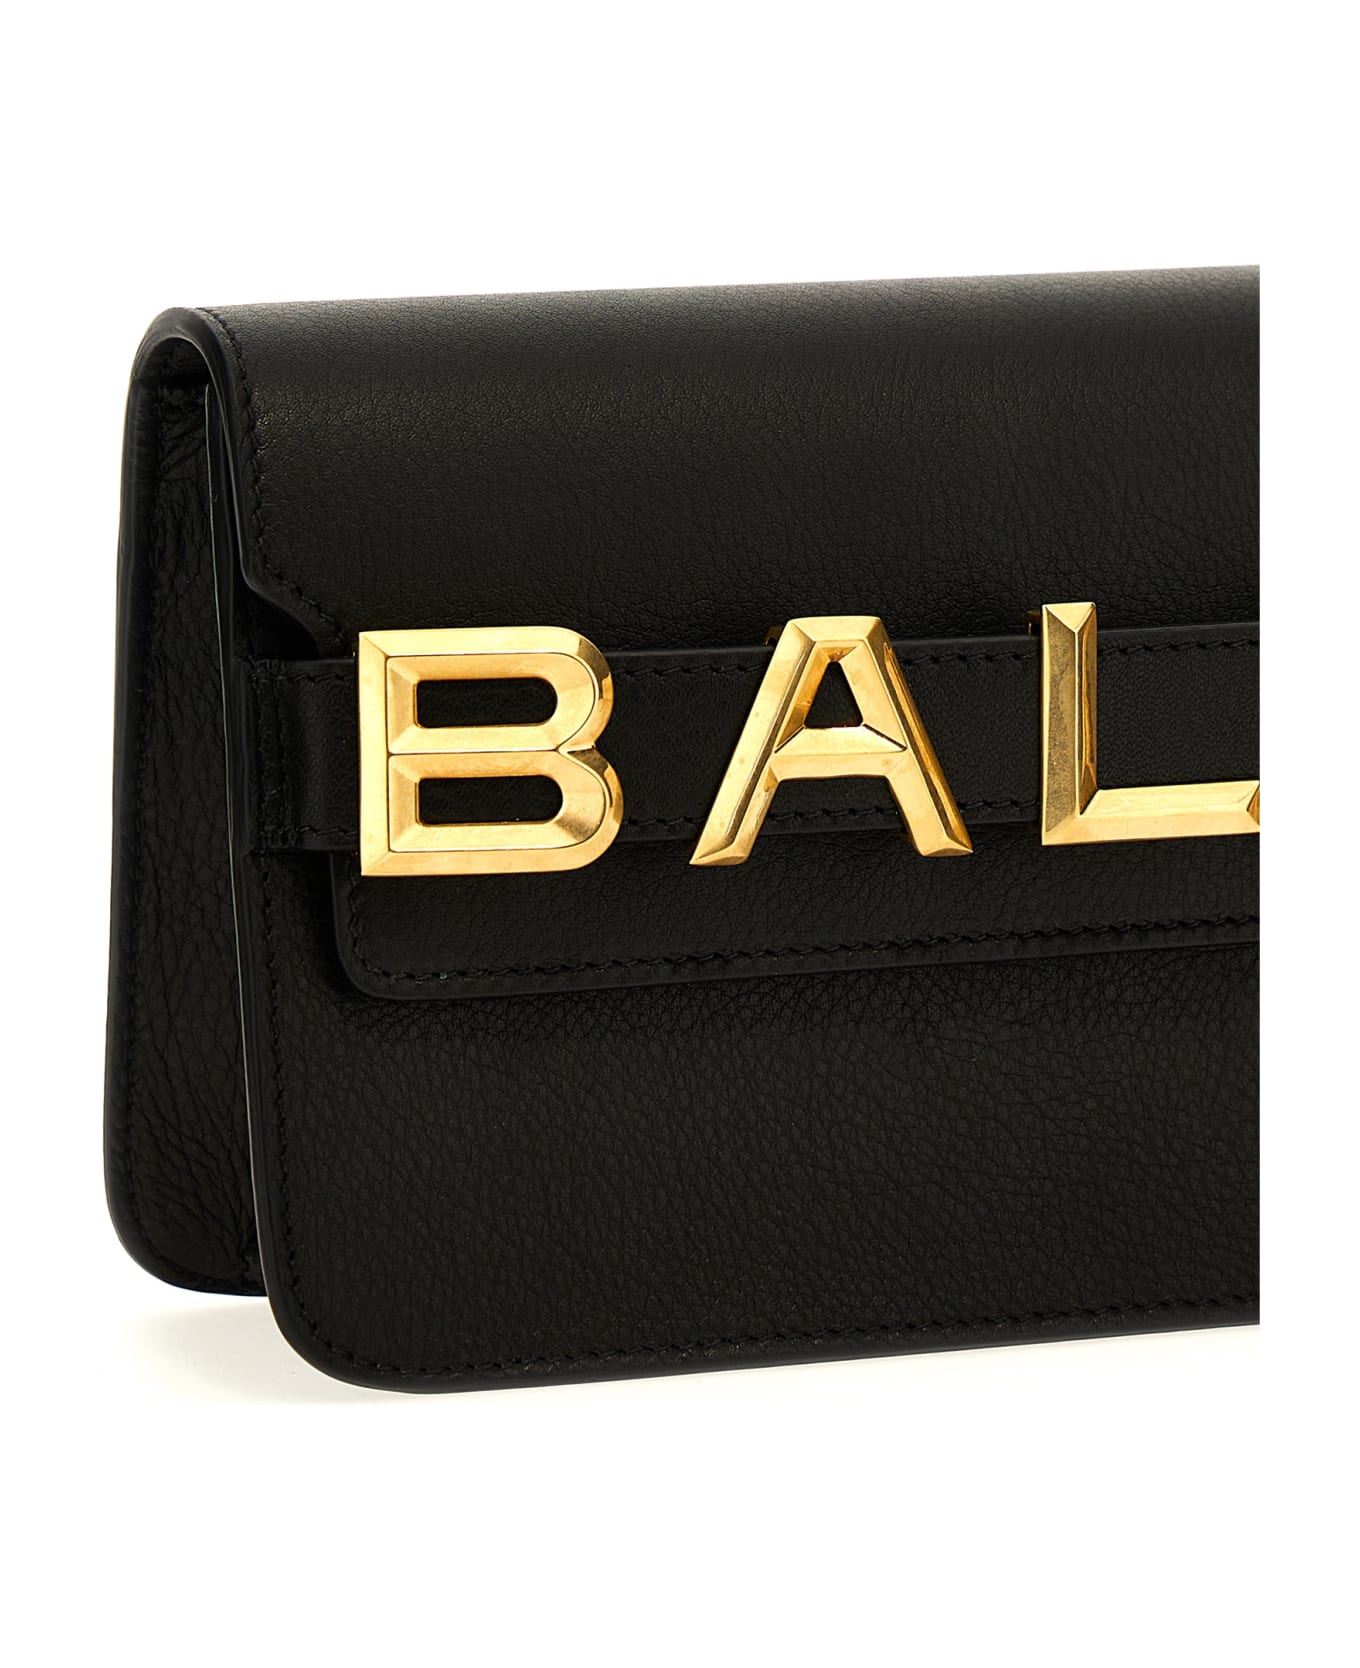 Bally Logo Crossbody Bag - Black  